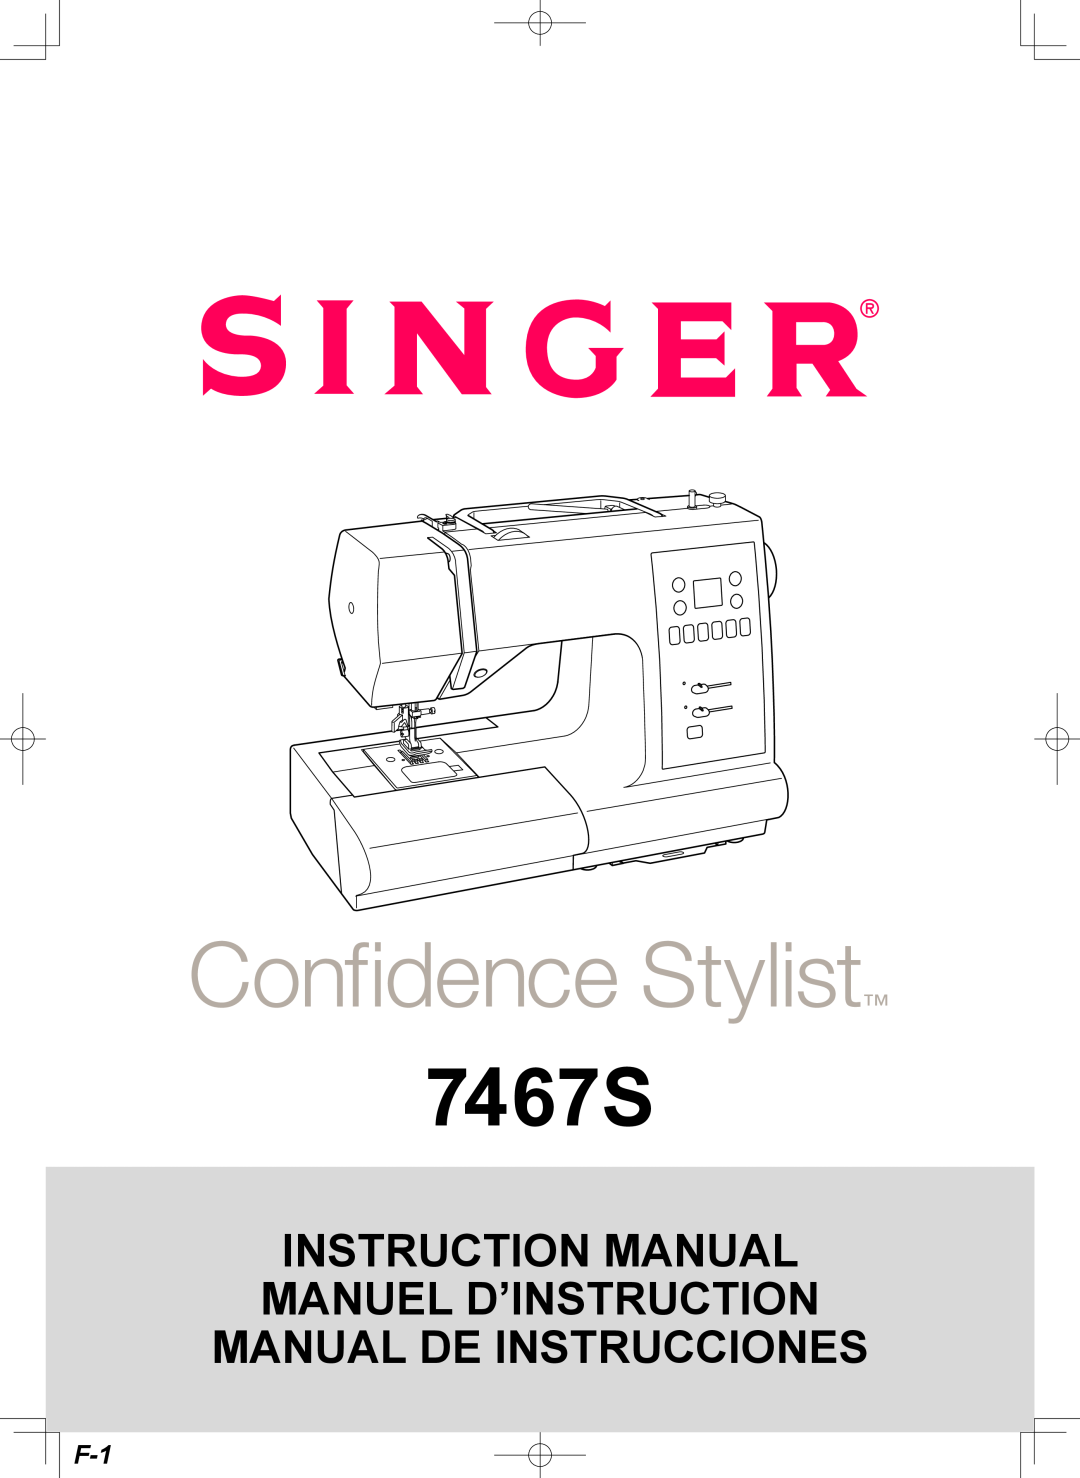 Singer 7467S instruction manual Instruction Manual Manuel D’Instruction Manual De Instrucciones 